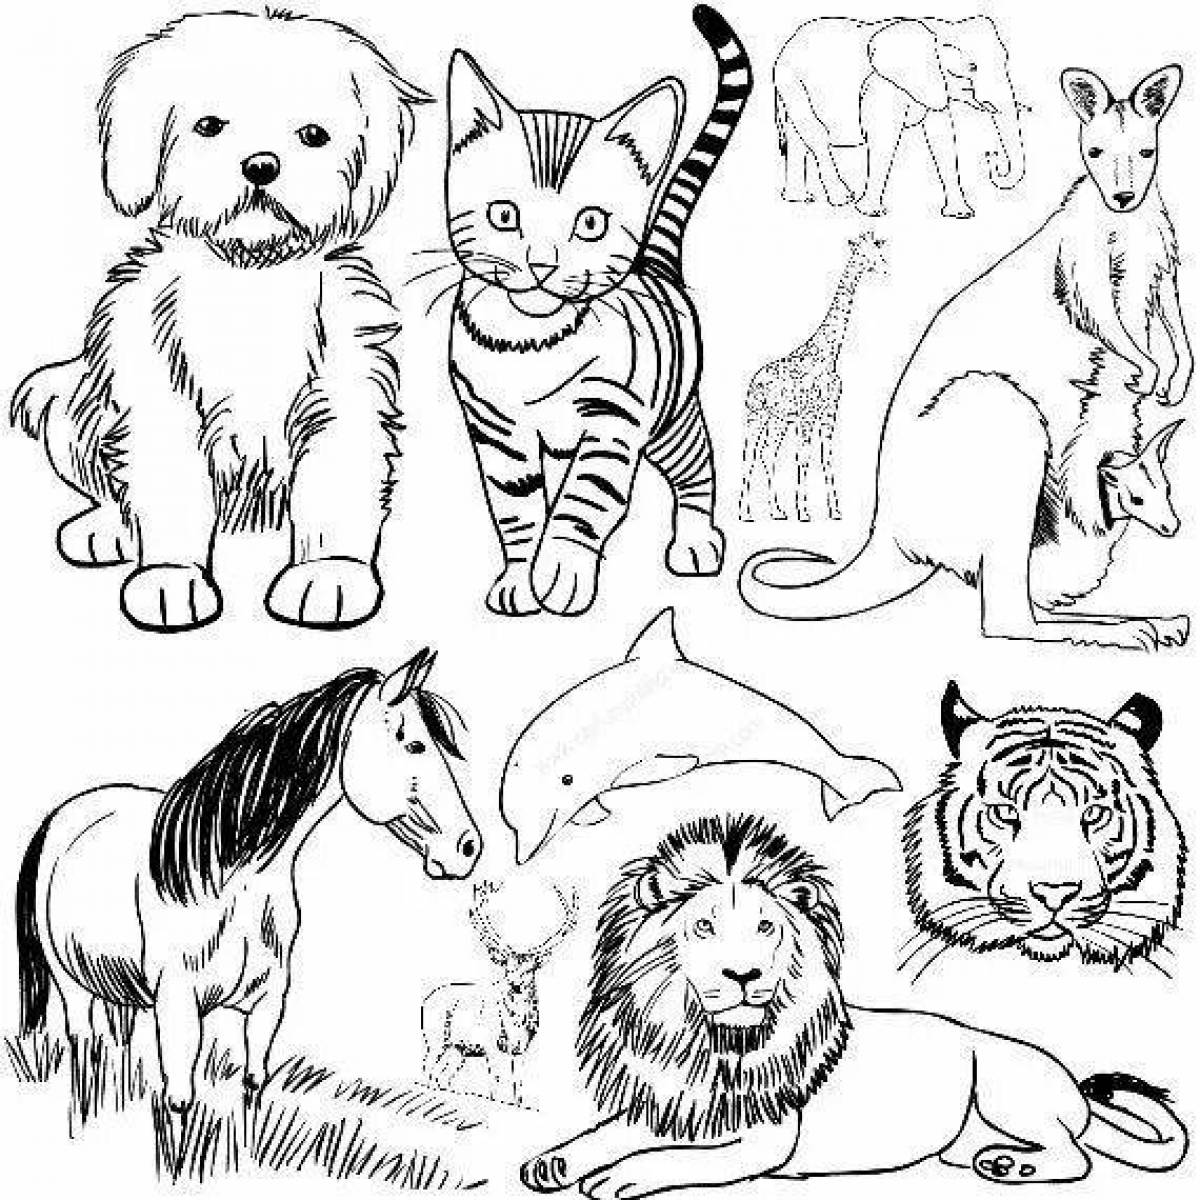 Miscellaneous animals #6